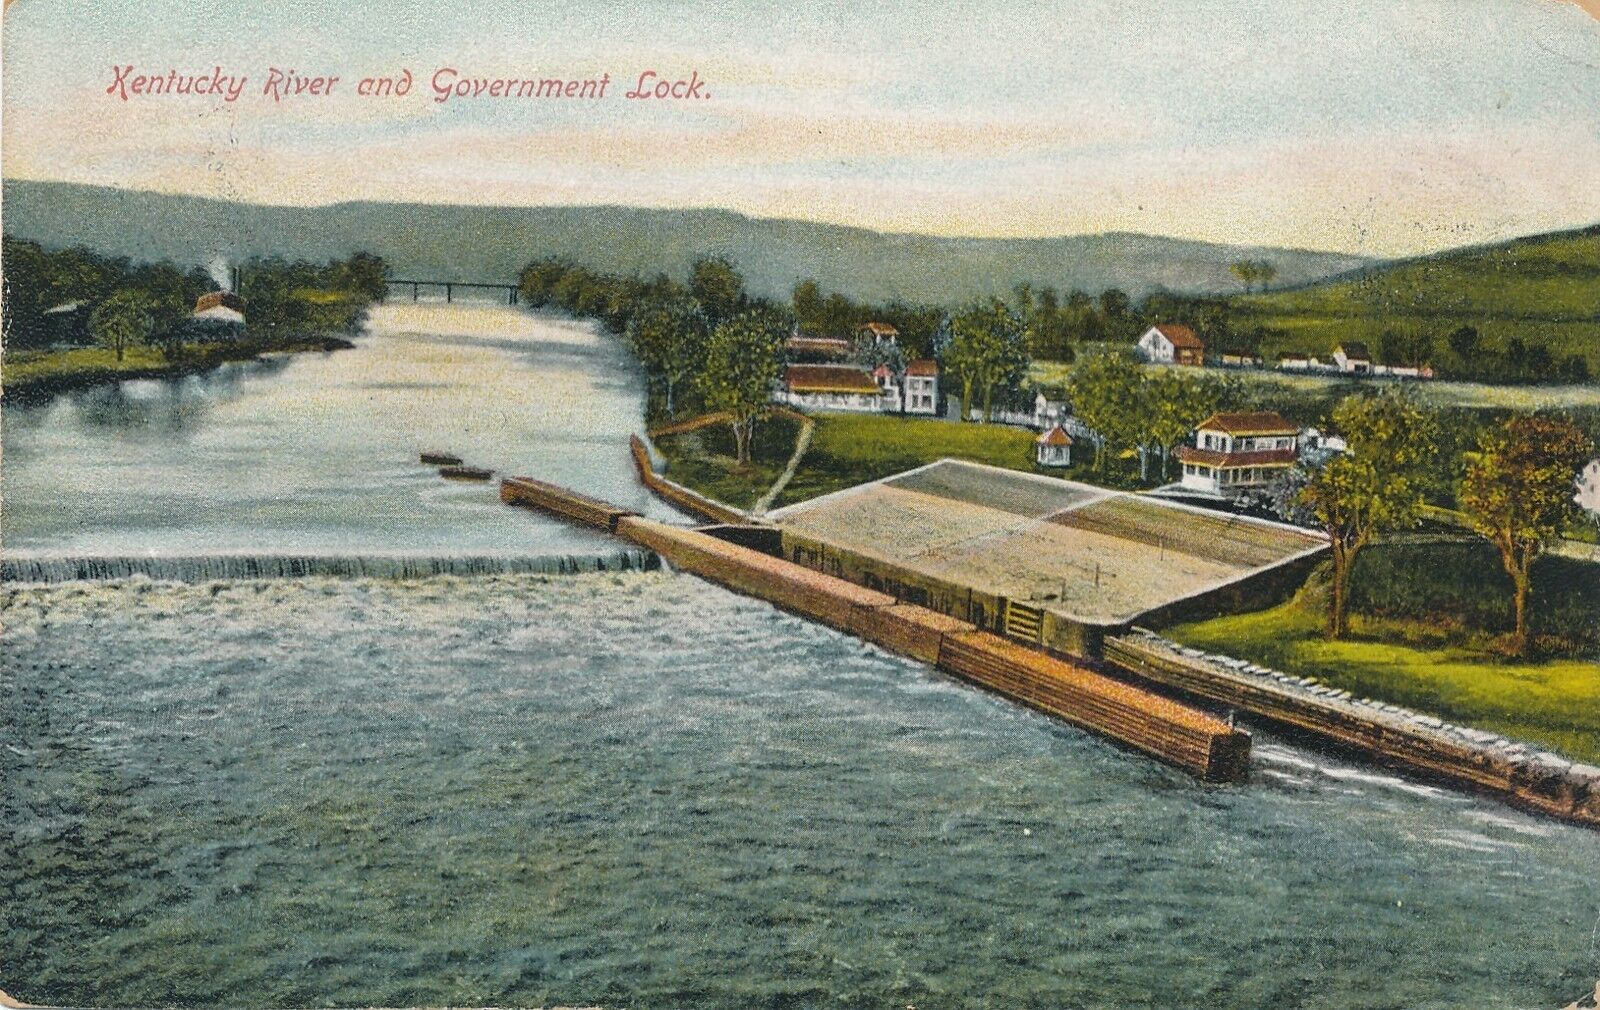 KENTUCKY KY – Kentucky River and Government Lock - 1911